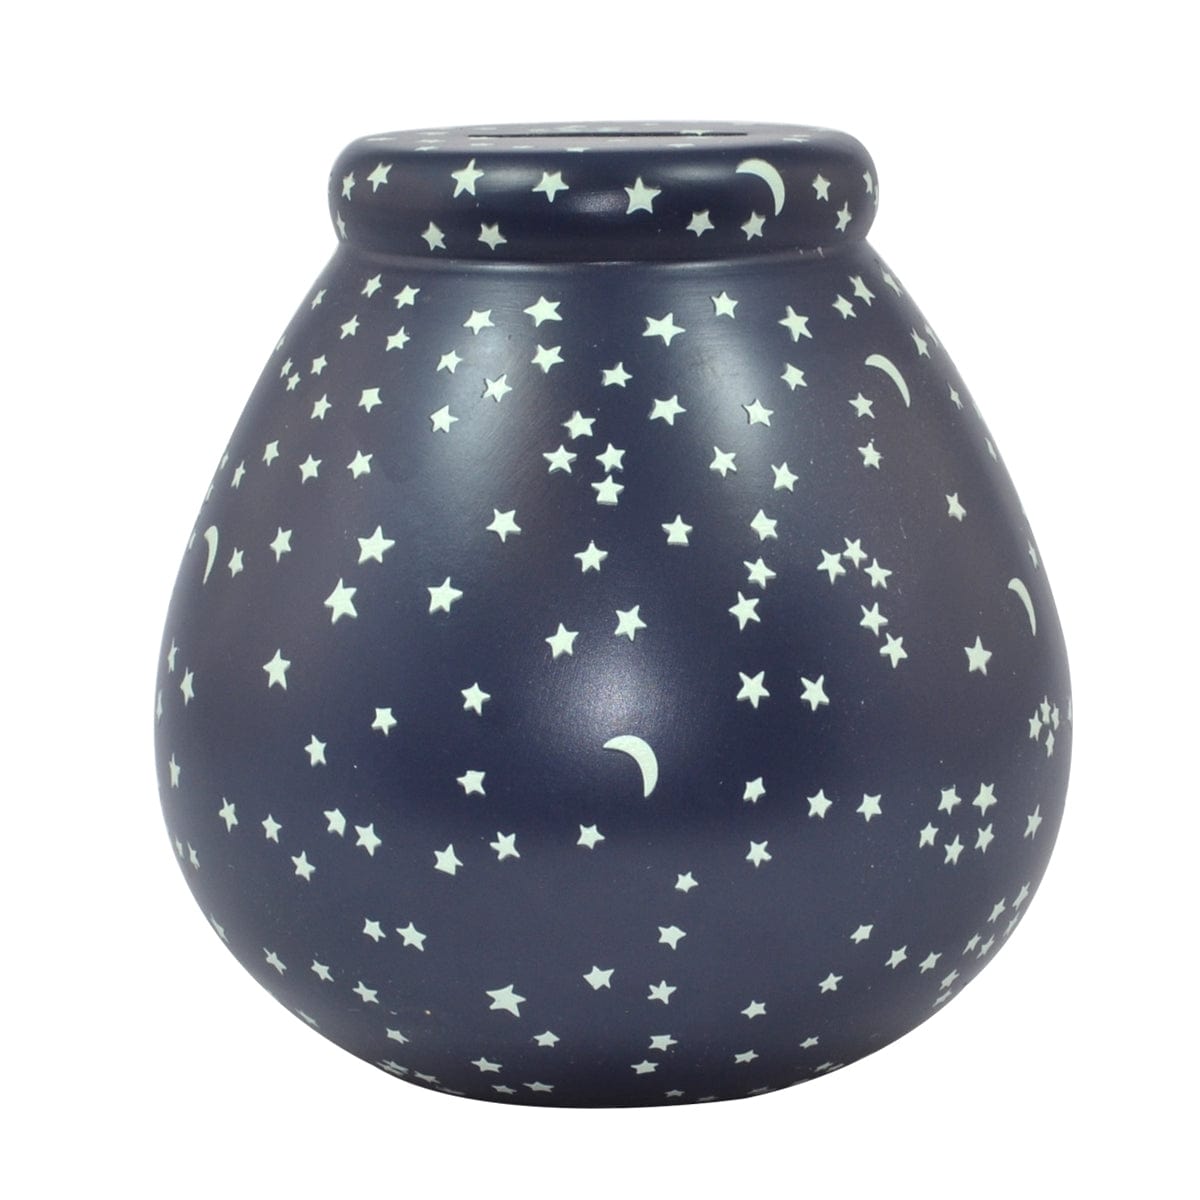 Pot of Dreams Money Box Pot of Dreams - Constellation Stars Glow in the Dark Money Box